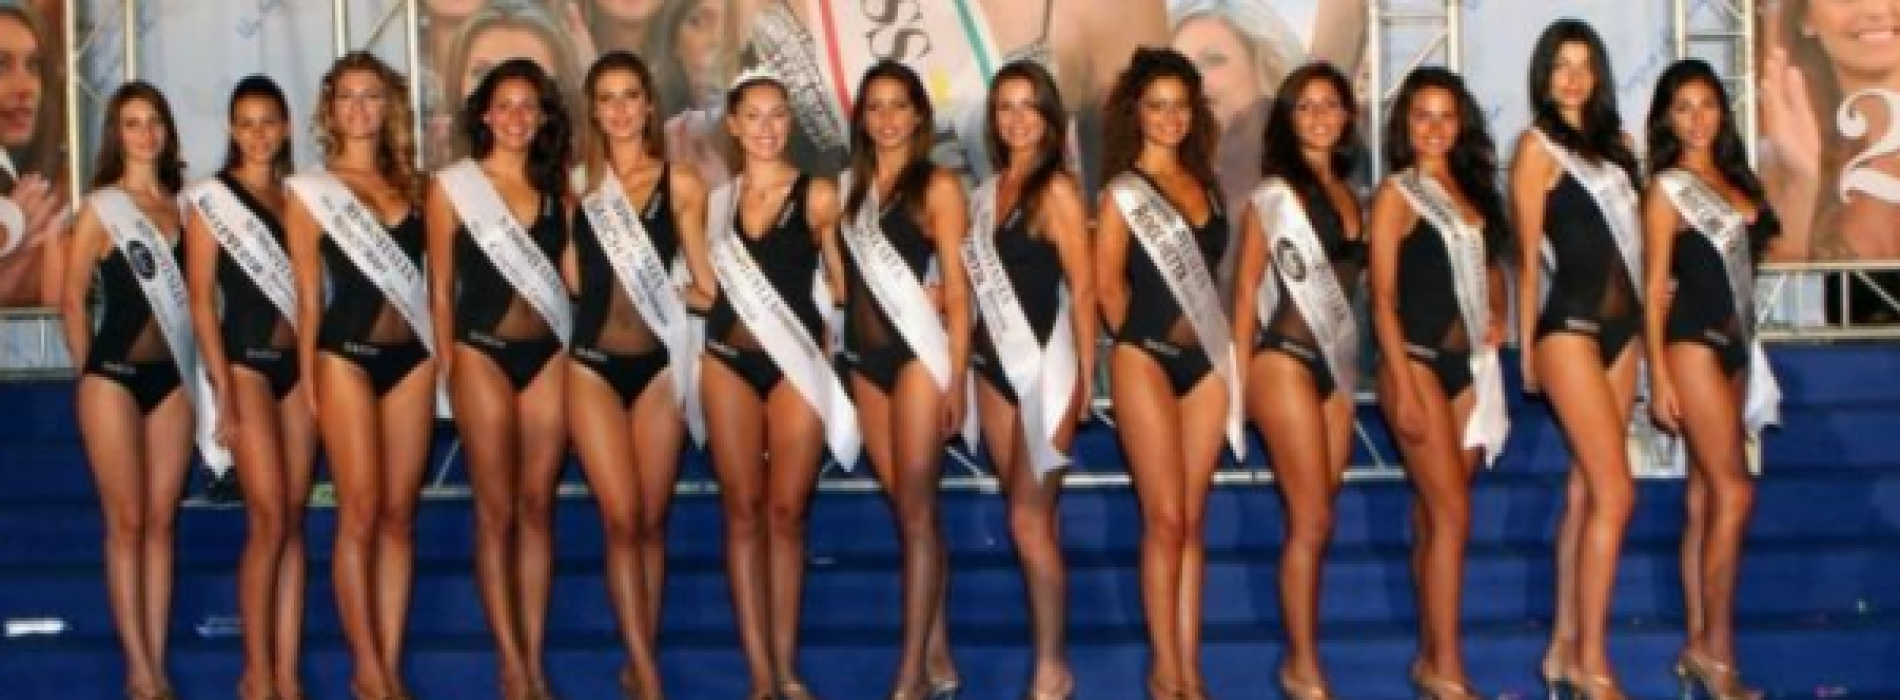 Miss Italia, al Jambo1 trenta ragazze per una fascia